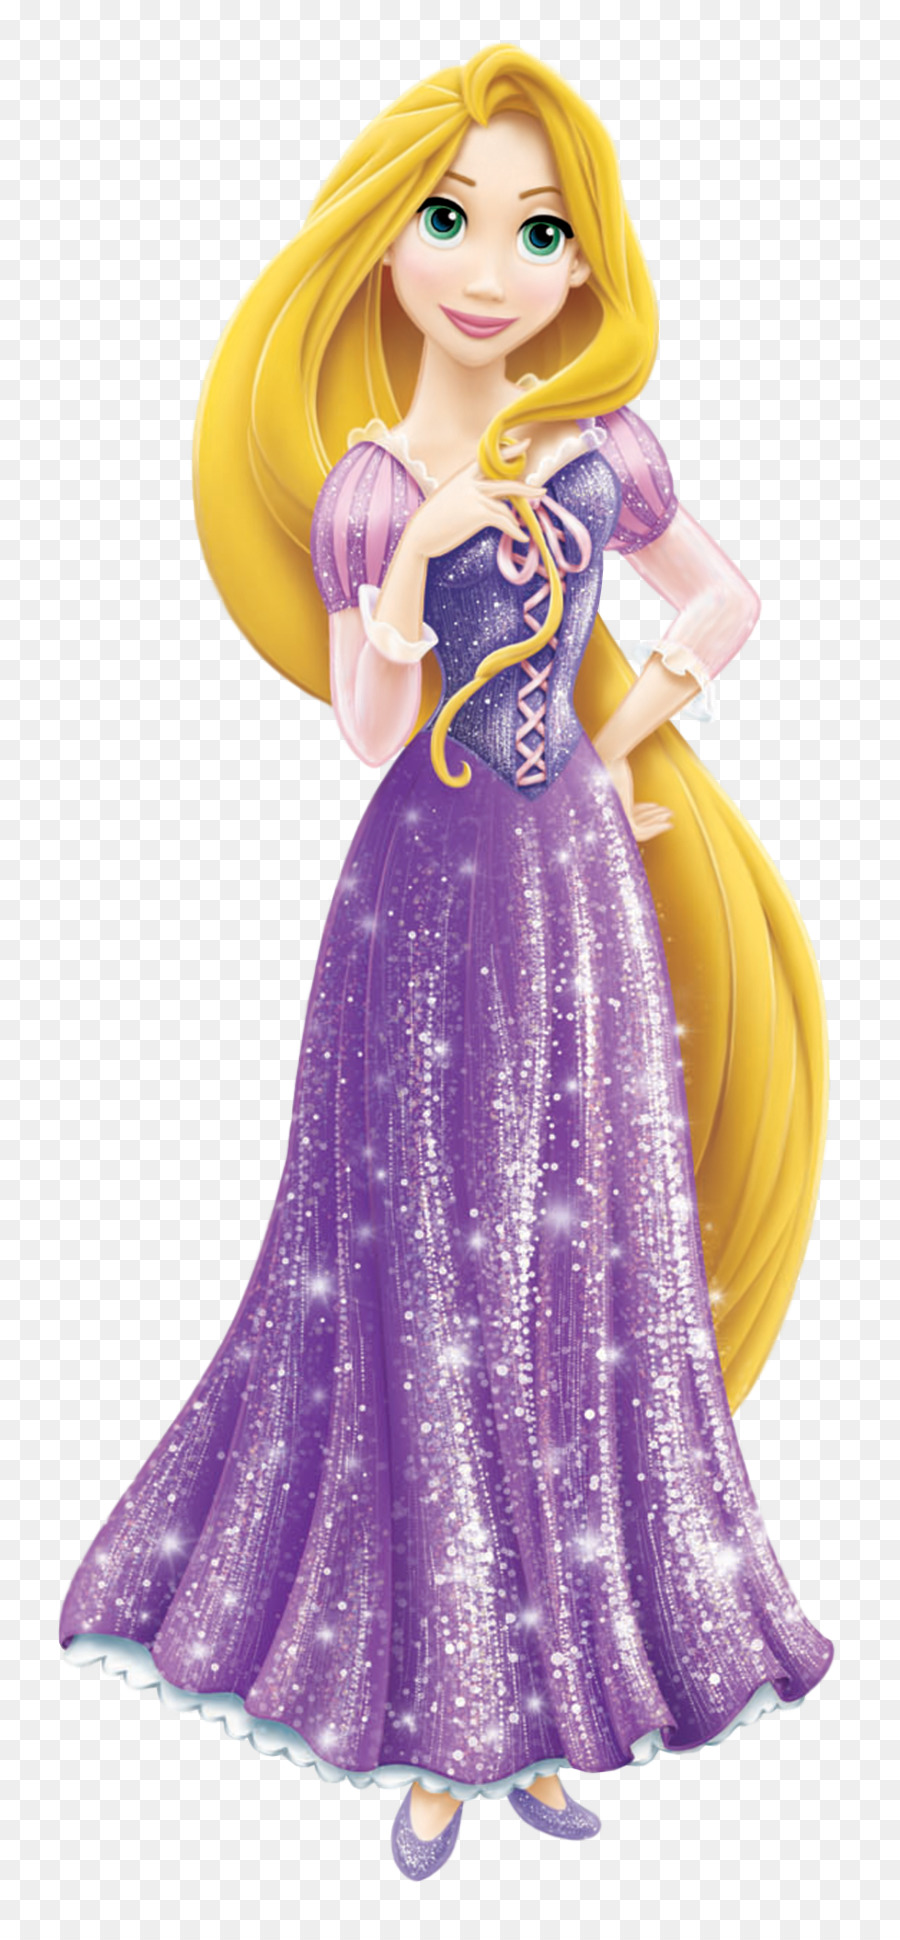 Tangled Rapunzel Costume Dress Disney Princess - tangled confessions png download - 957*2053 - Free Transparent Tangled png Download.